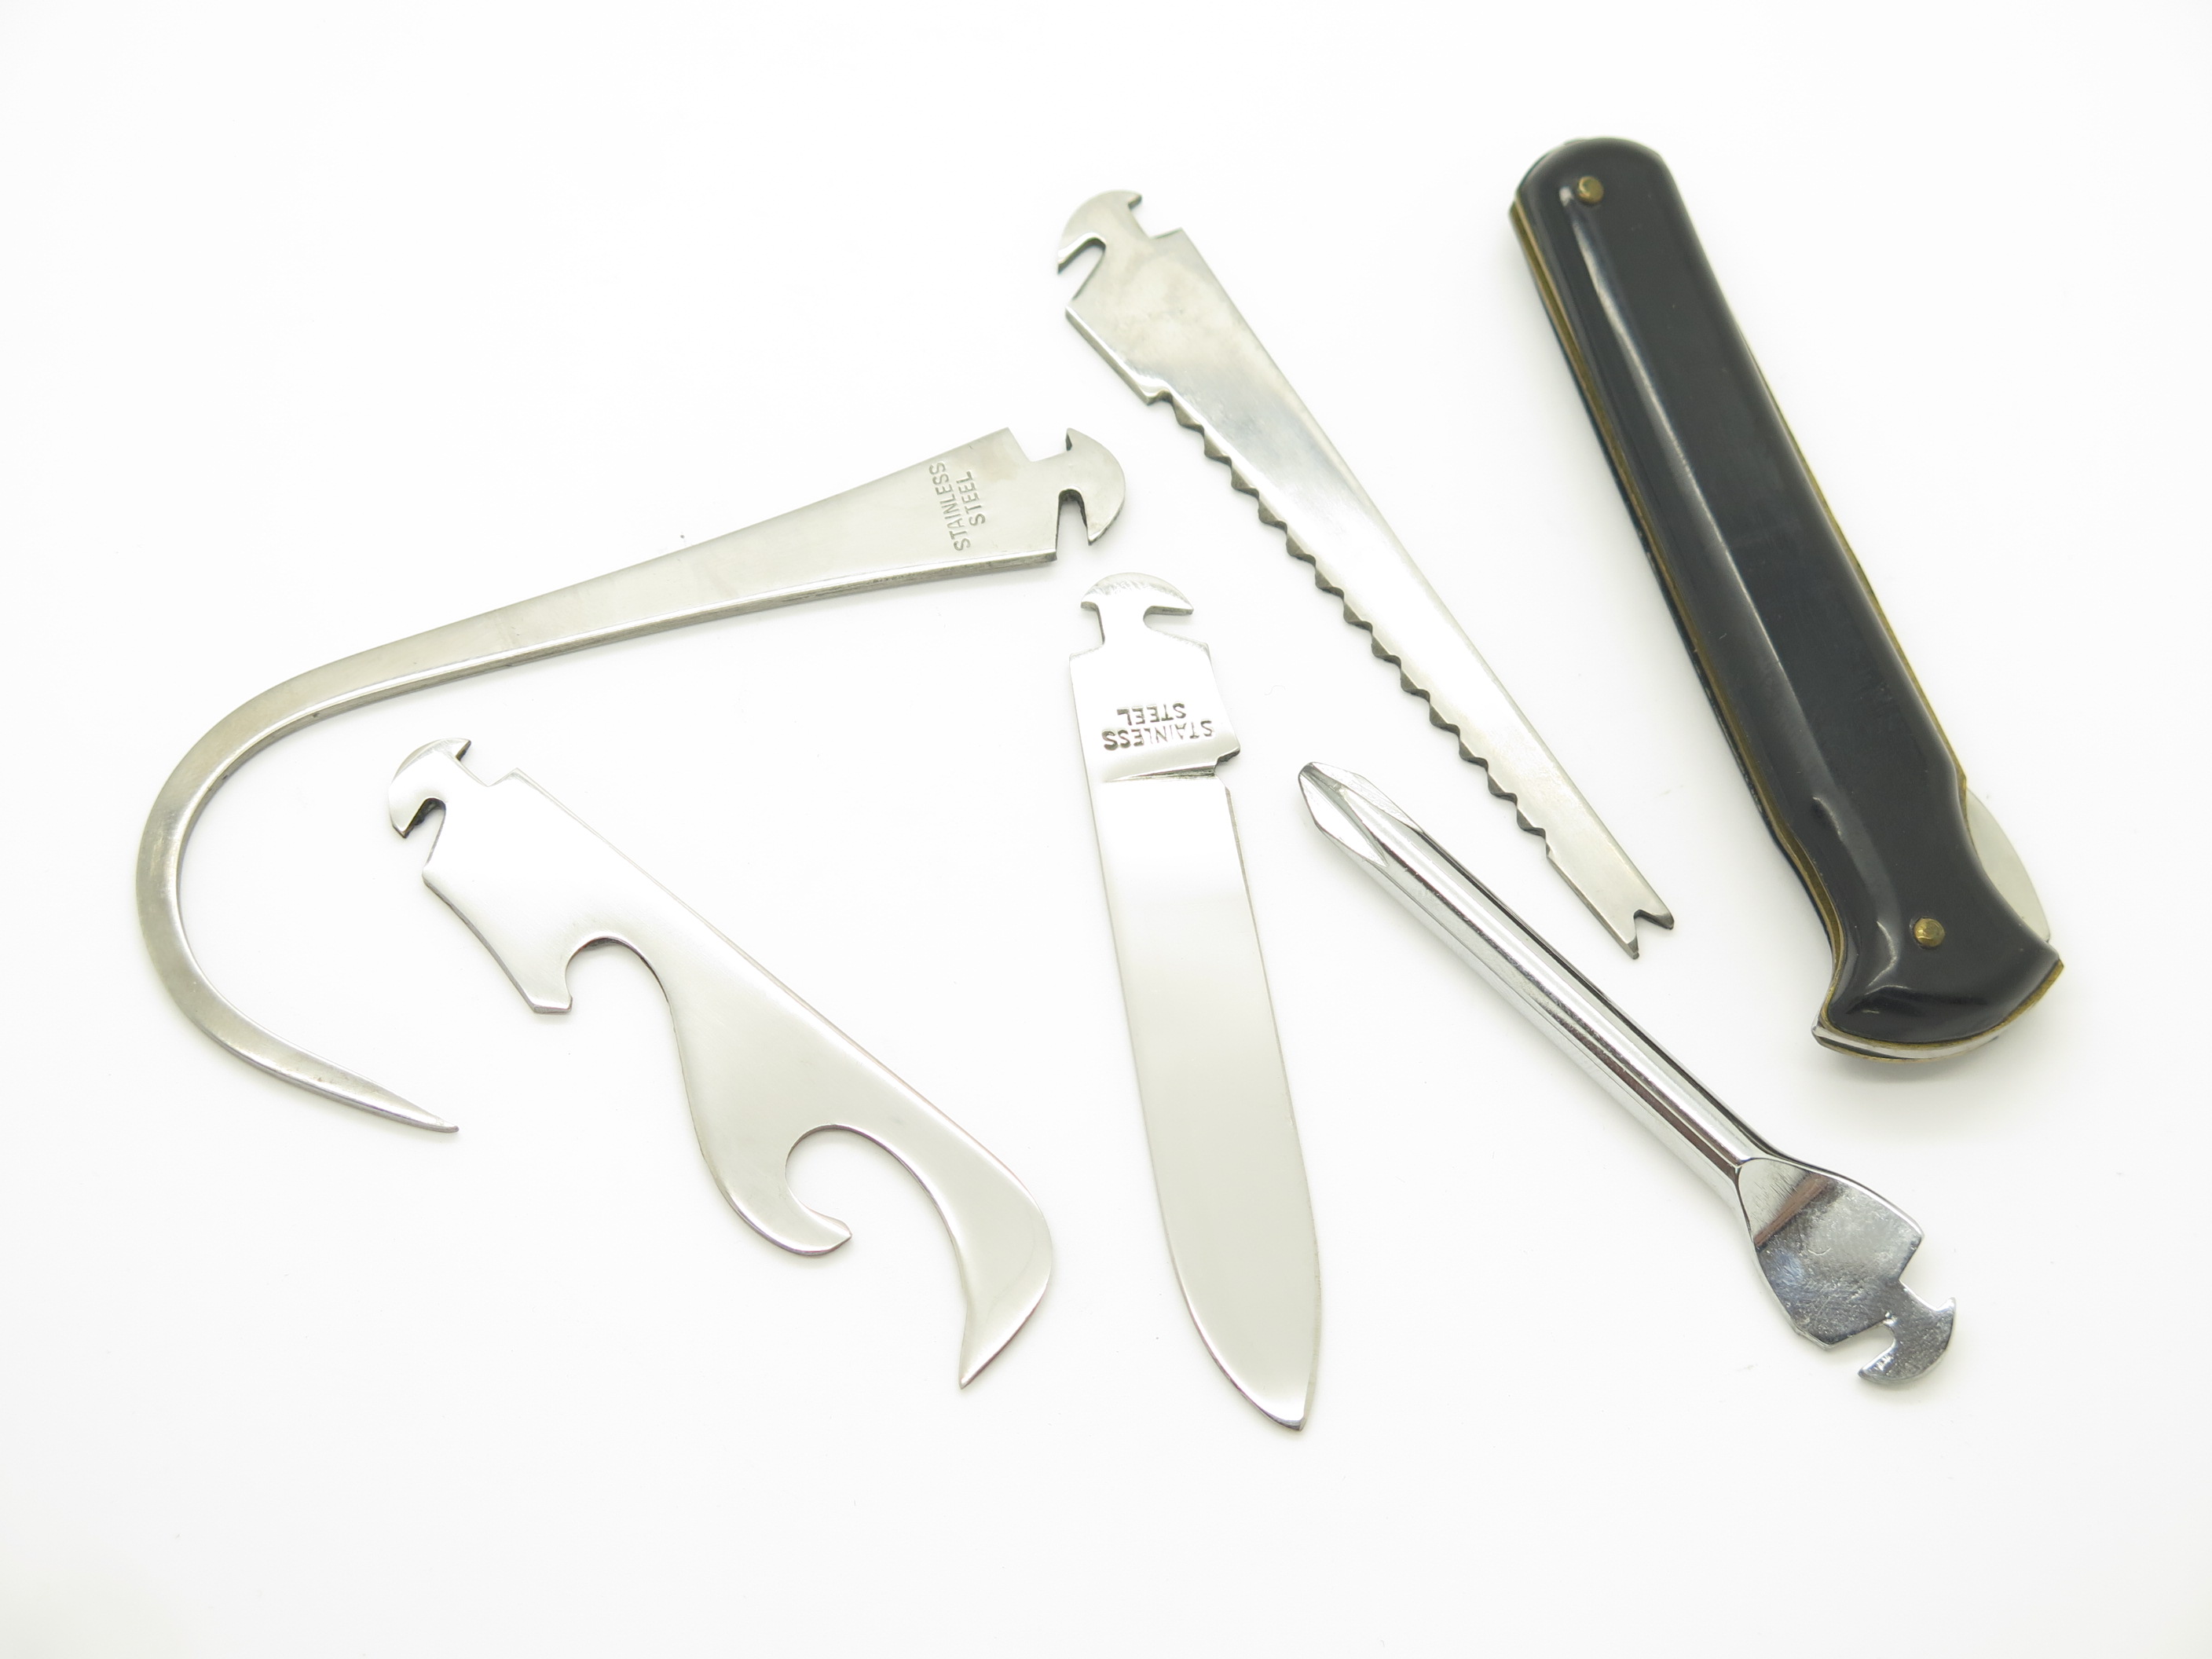 Vintage 1960s Seki Japan Fixed Fishing Knife Gaff Hook Tool Kit